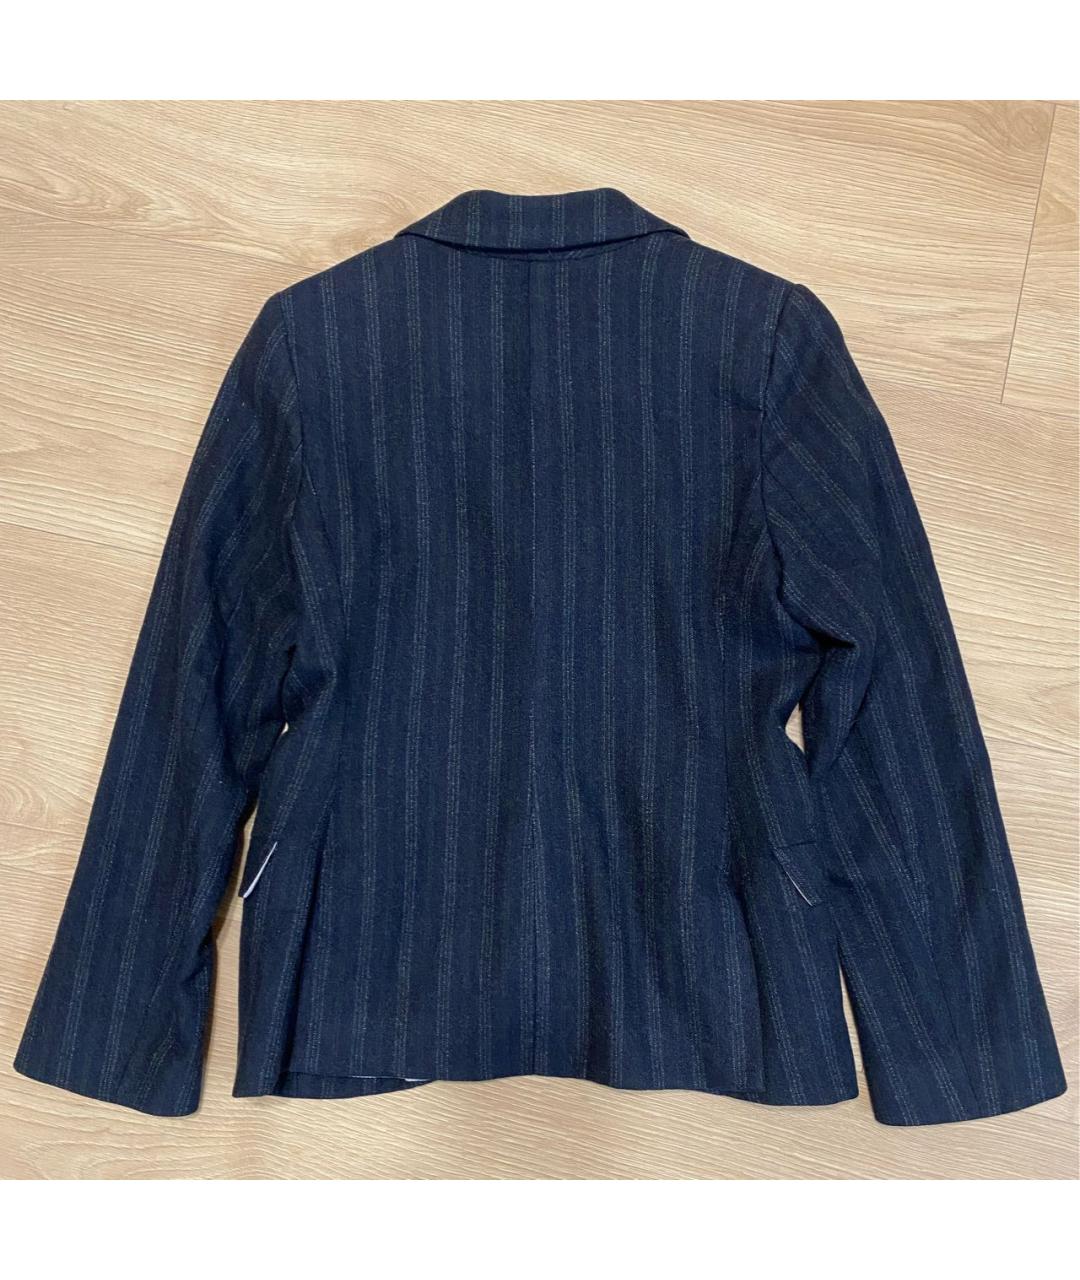 GOLDEN GOOSE DELUXE BRAND Темно-синий шерстяной жакет/пиджак, фото 4